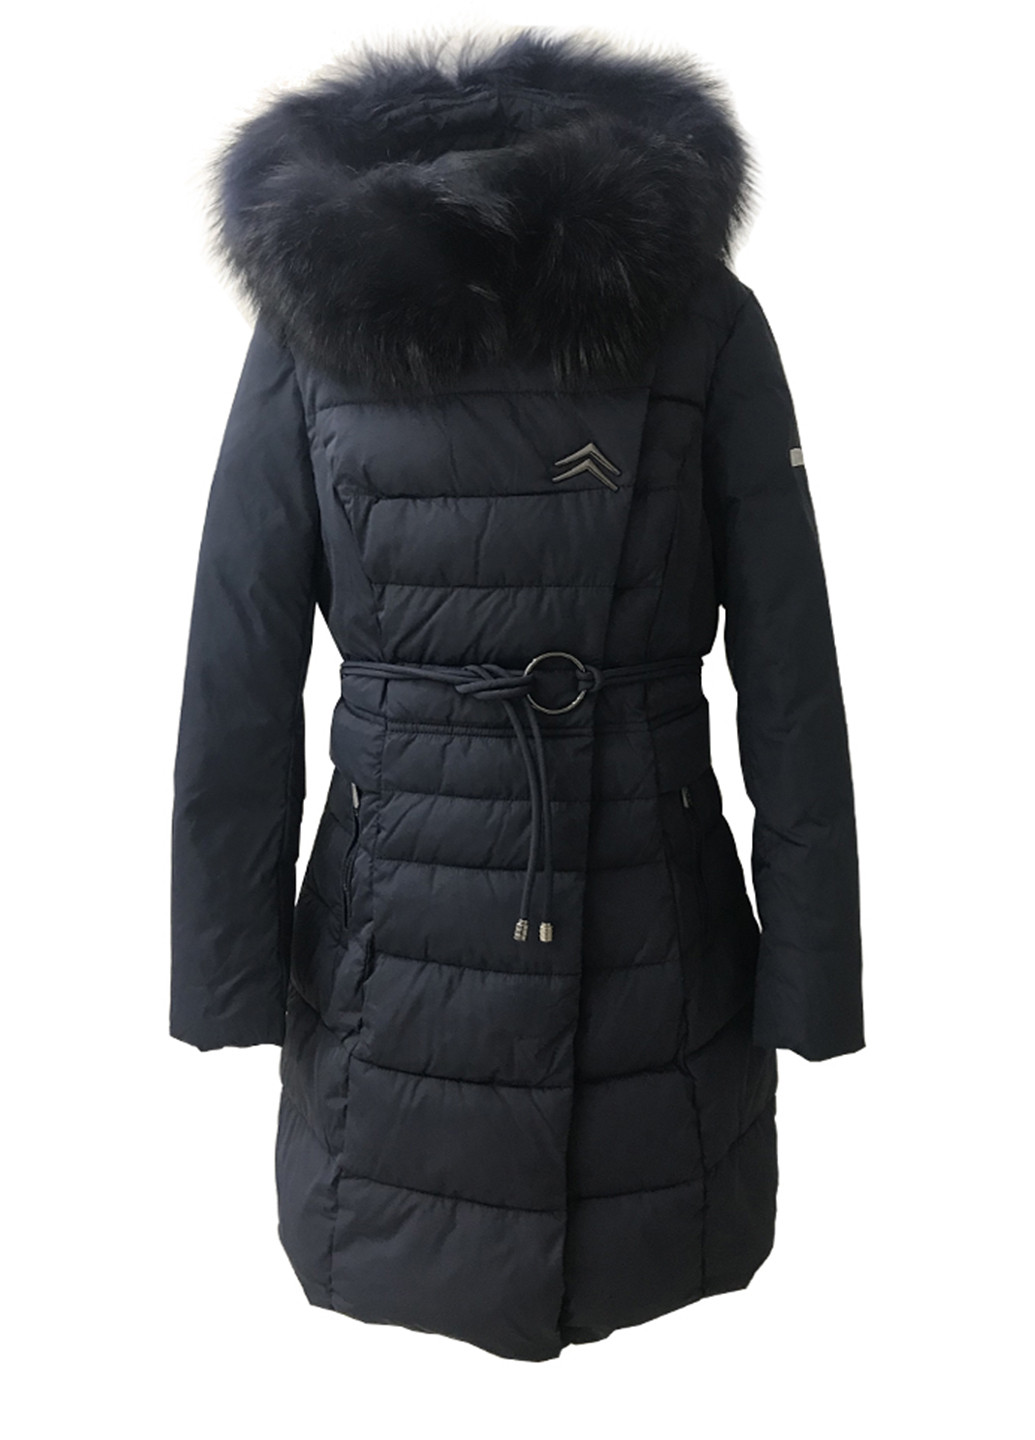 Темно-синяя зимняя куртка Geldeen Fox